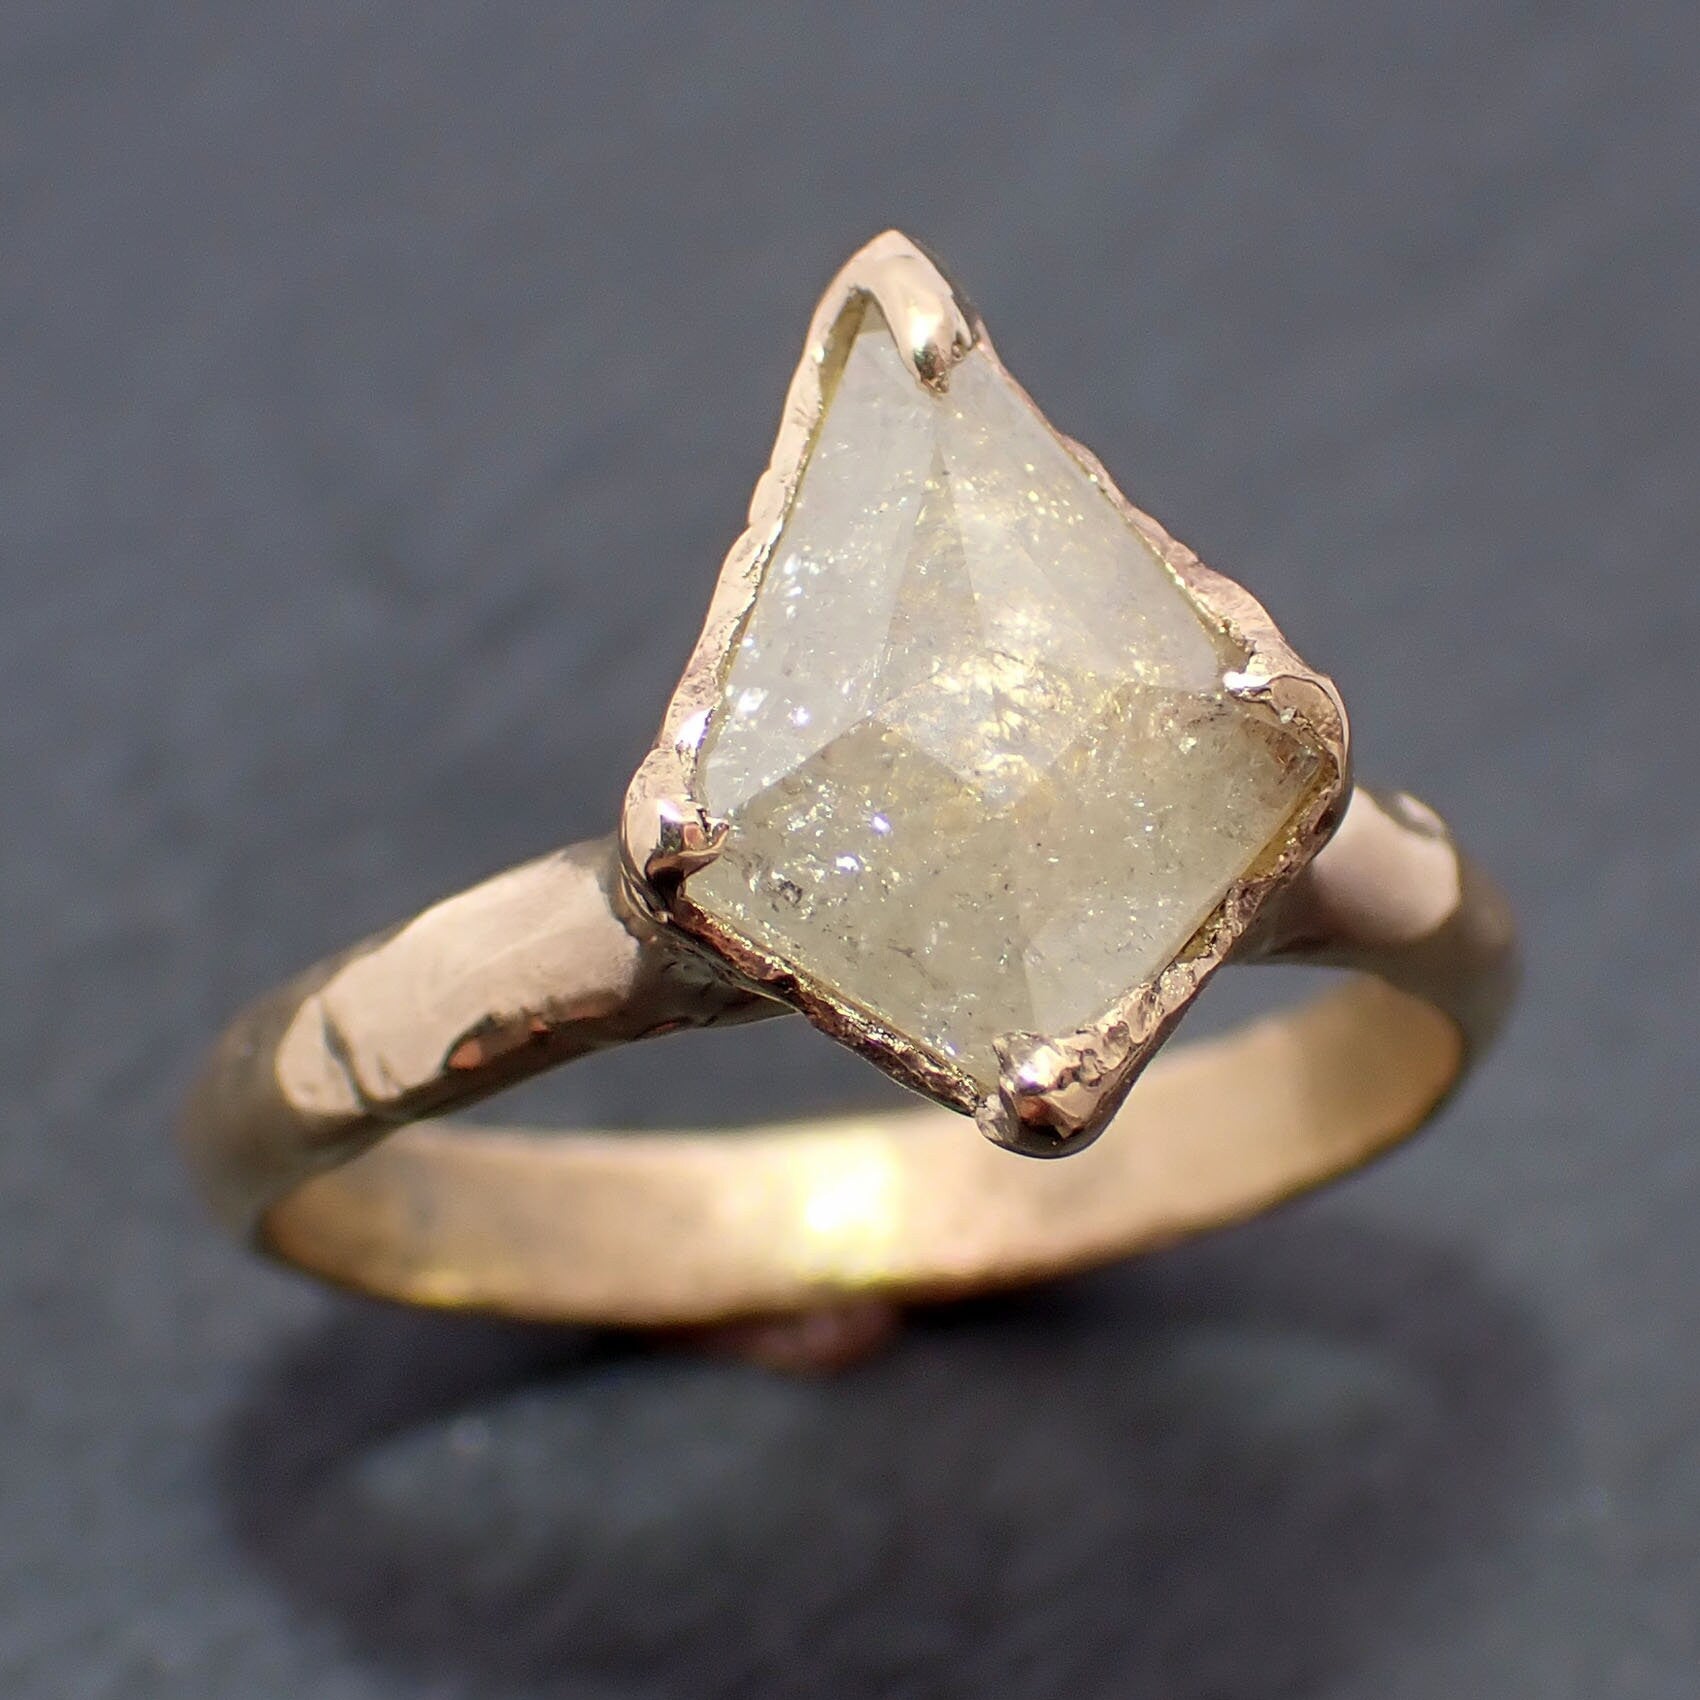 Fancy cut white Diamond Solitaire Engagement 18k yellow Gold Wedding Ring byAngeline 3283